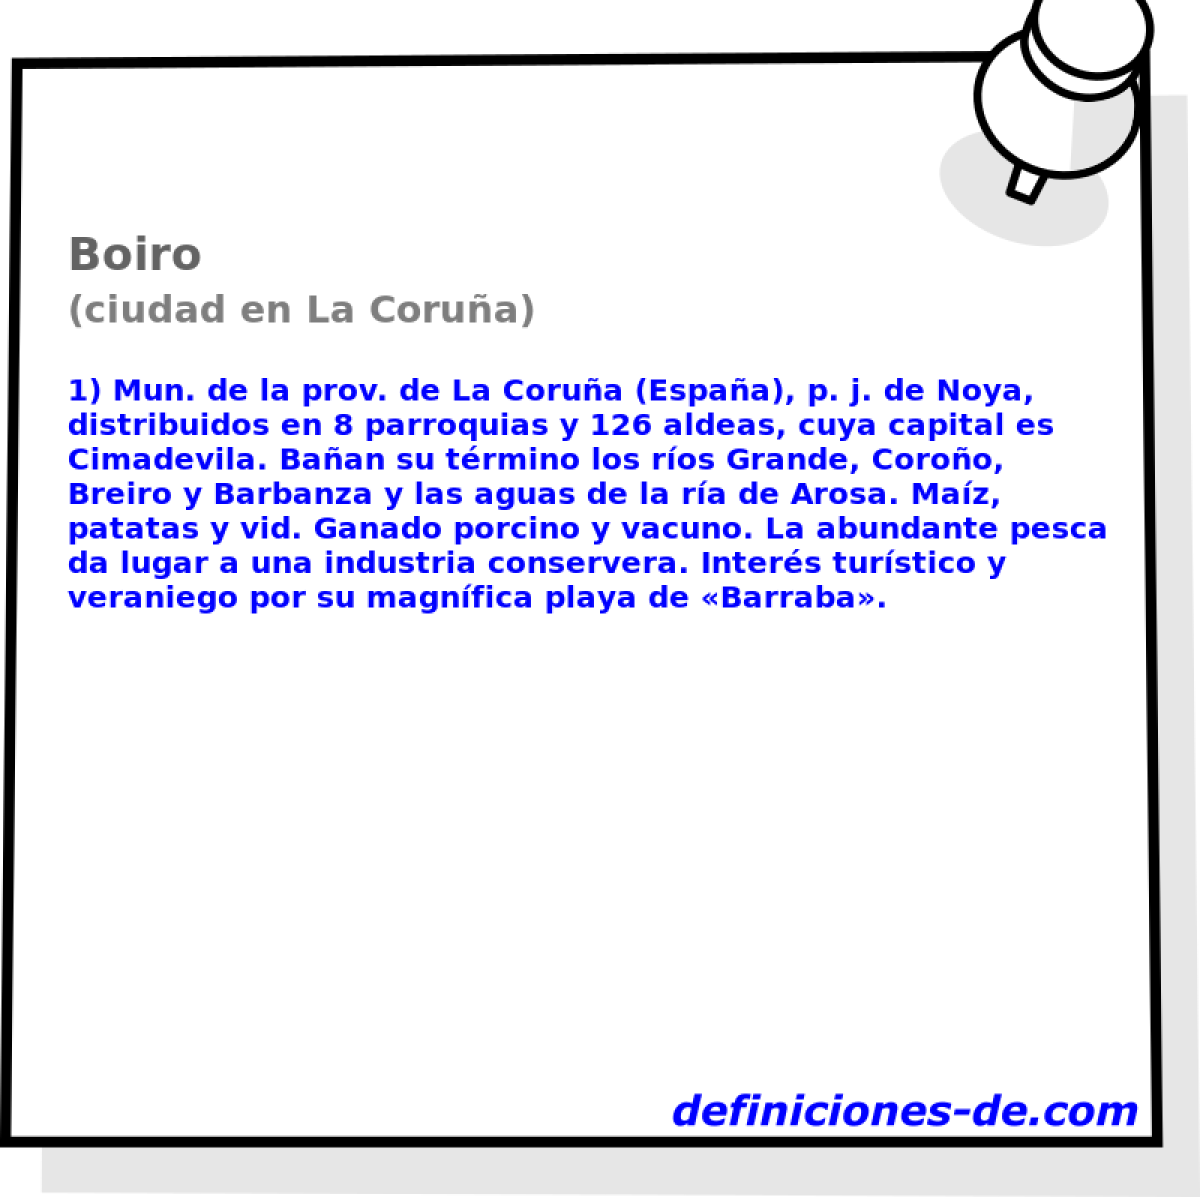 Boiro (ciudad en La Corua)